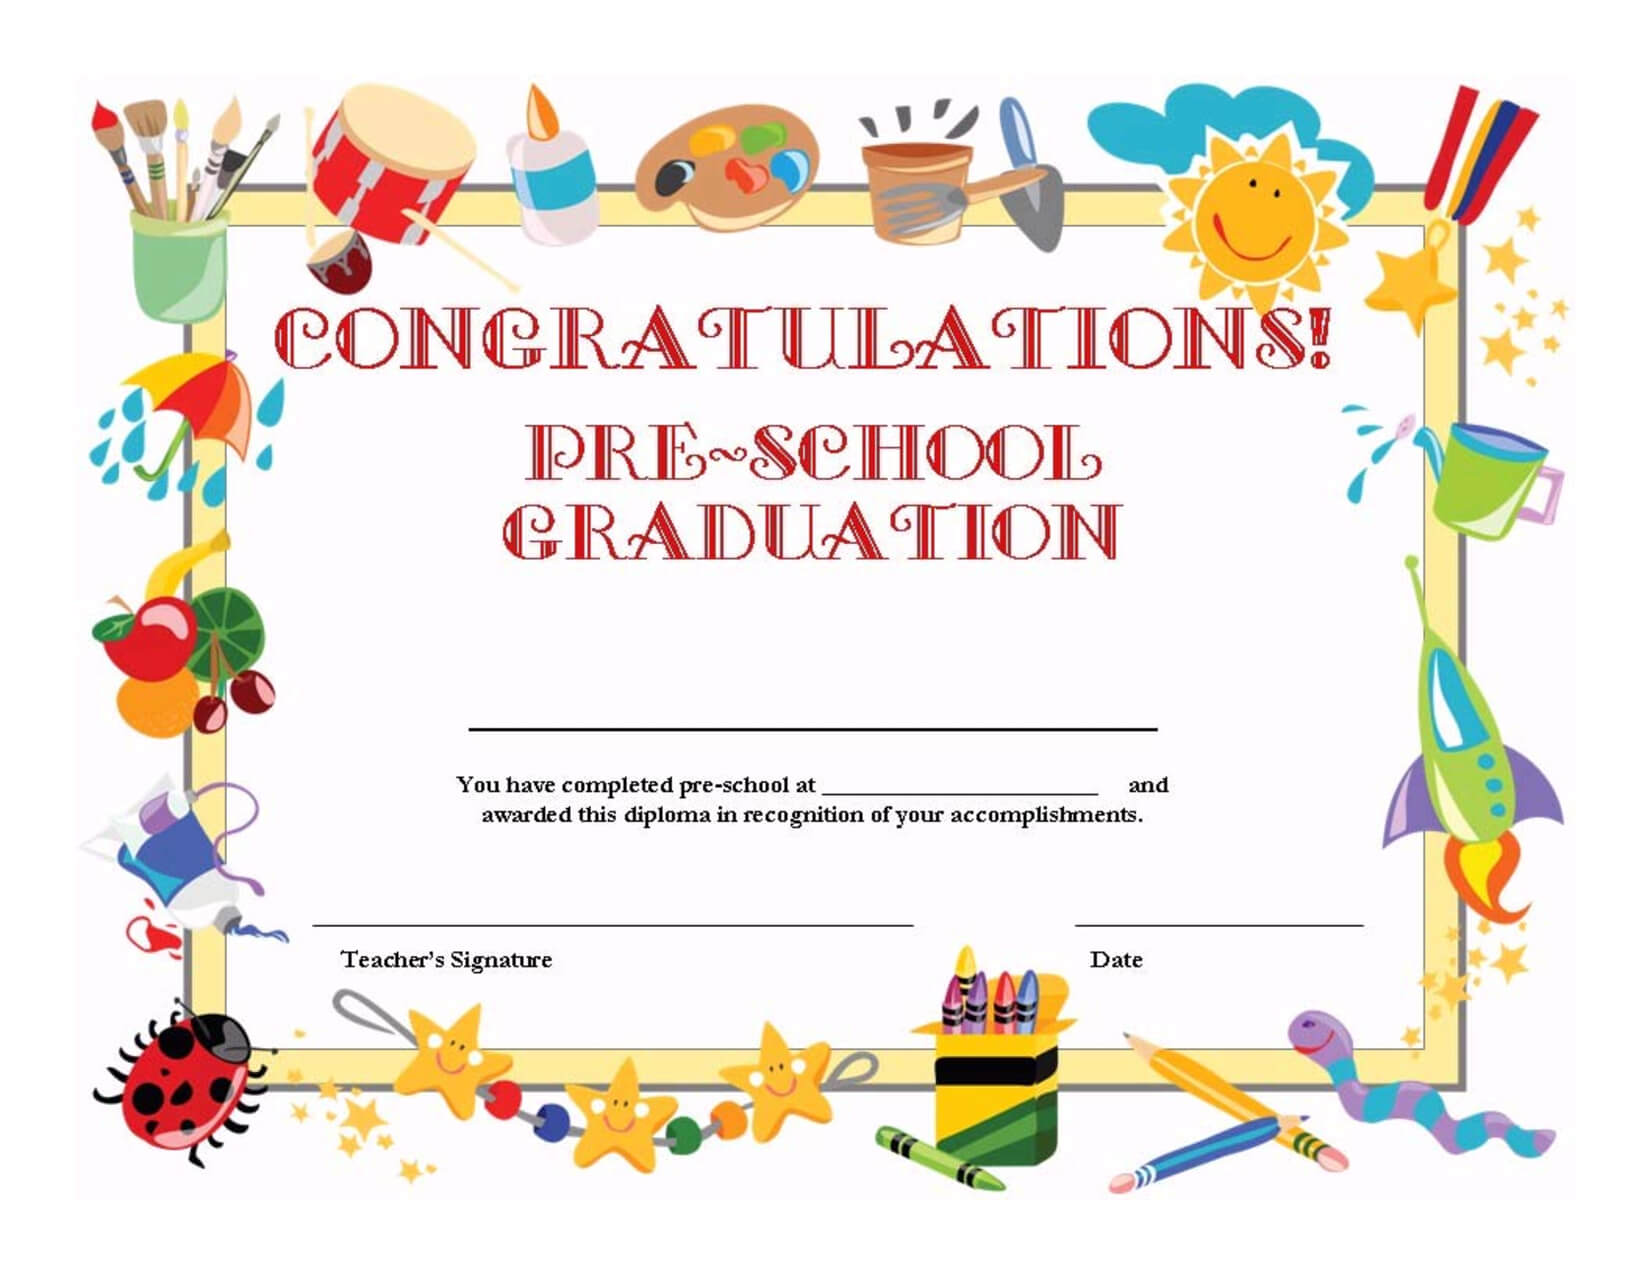 Preschool Graduation Certificate Template Free | Graduation With Preschool Graduation Certificate Template Free